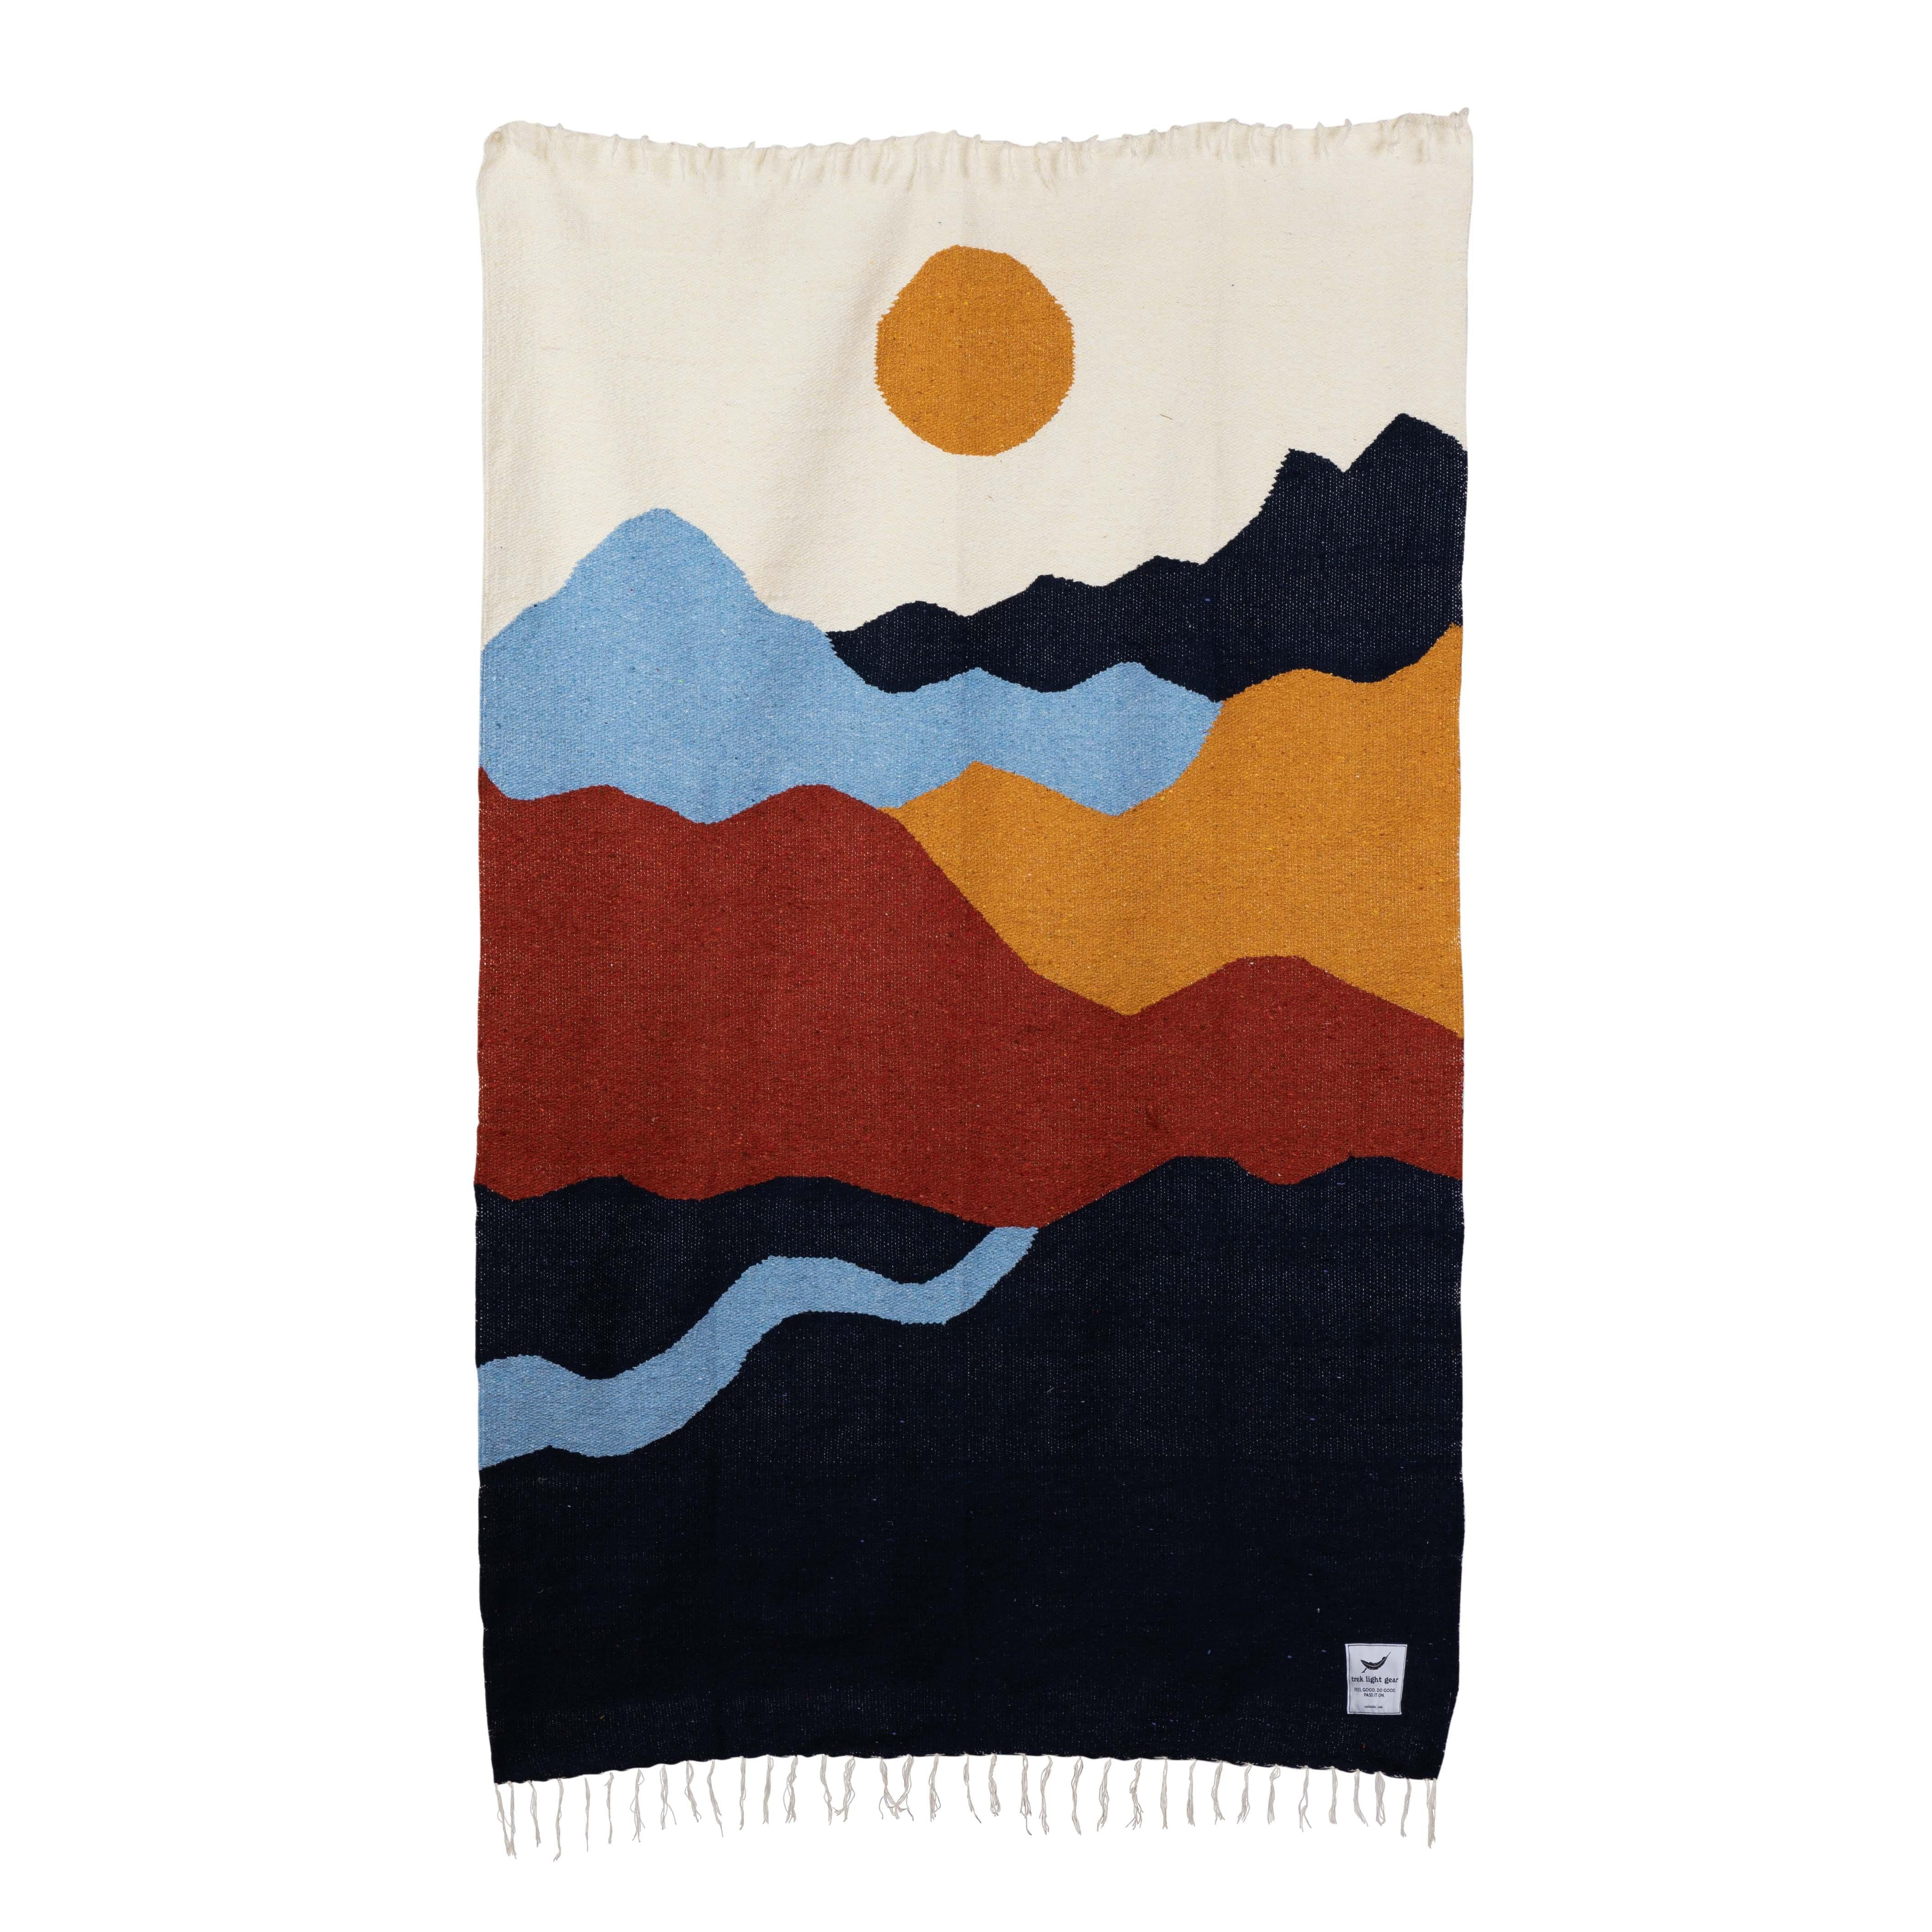 Handwoven Blankets. 100% Recycled Materials. Cozy & Soft. Trek Light.